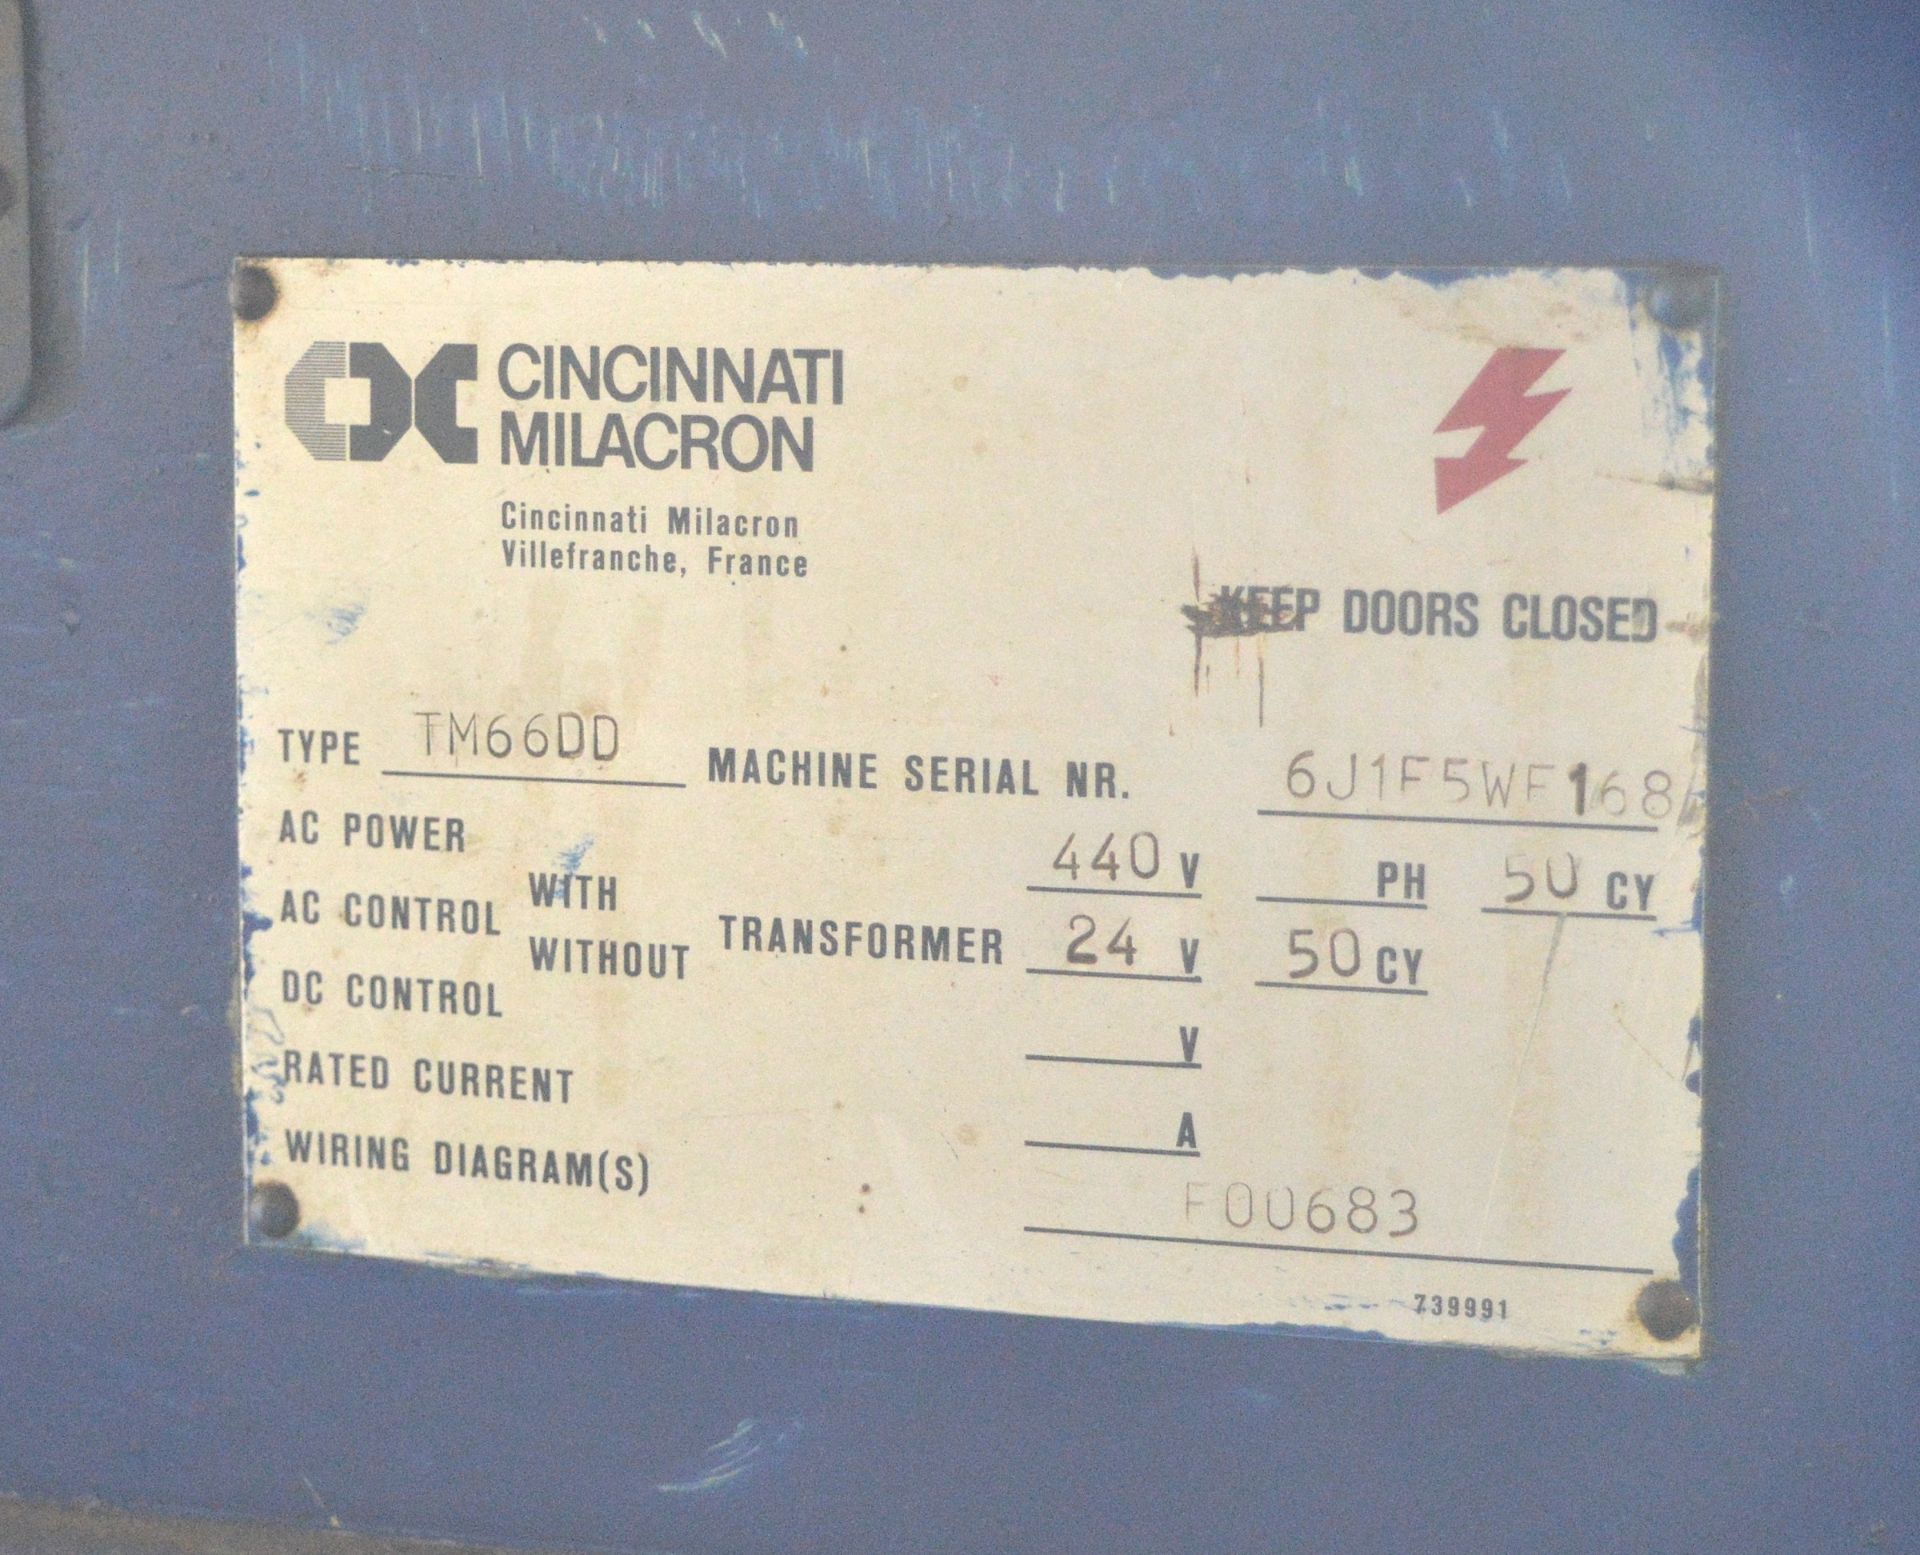 Cincinnati Milacron TM66DD Milling Machine - 440v - Serial No. 6J1F5WF168 - Image 14 of 15